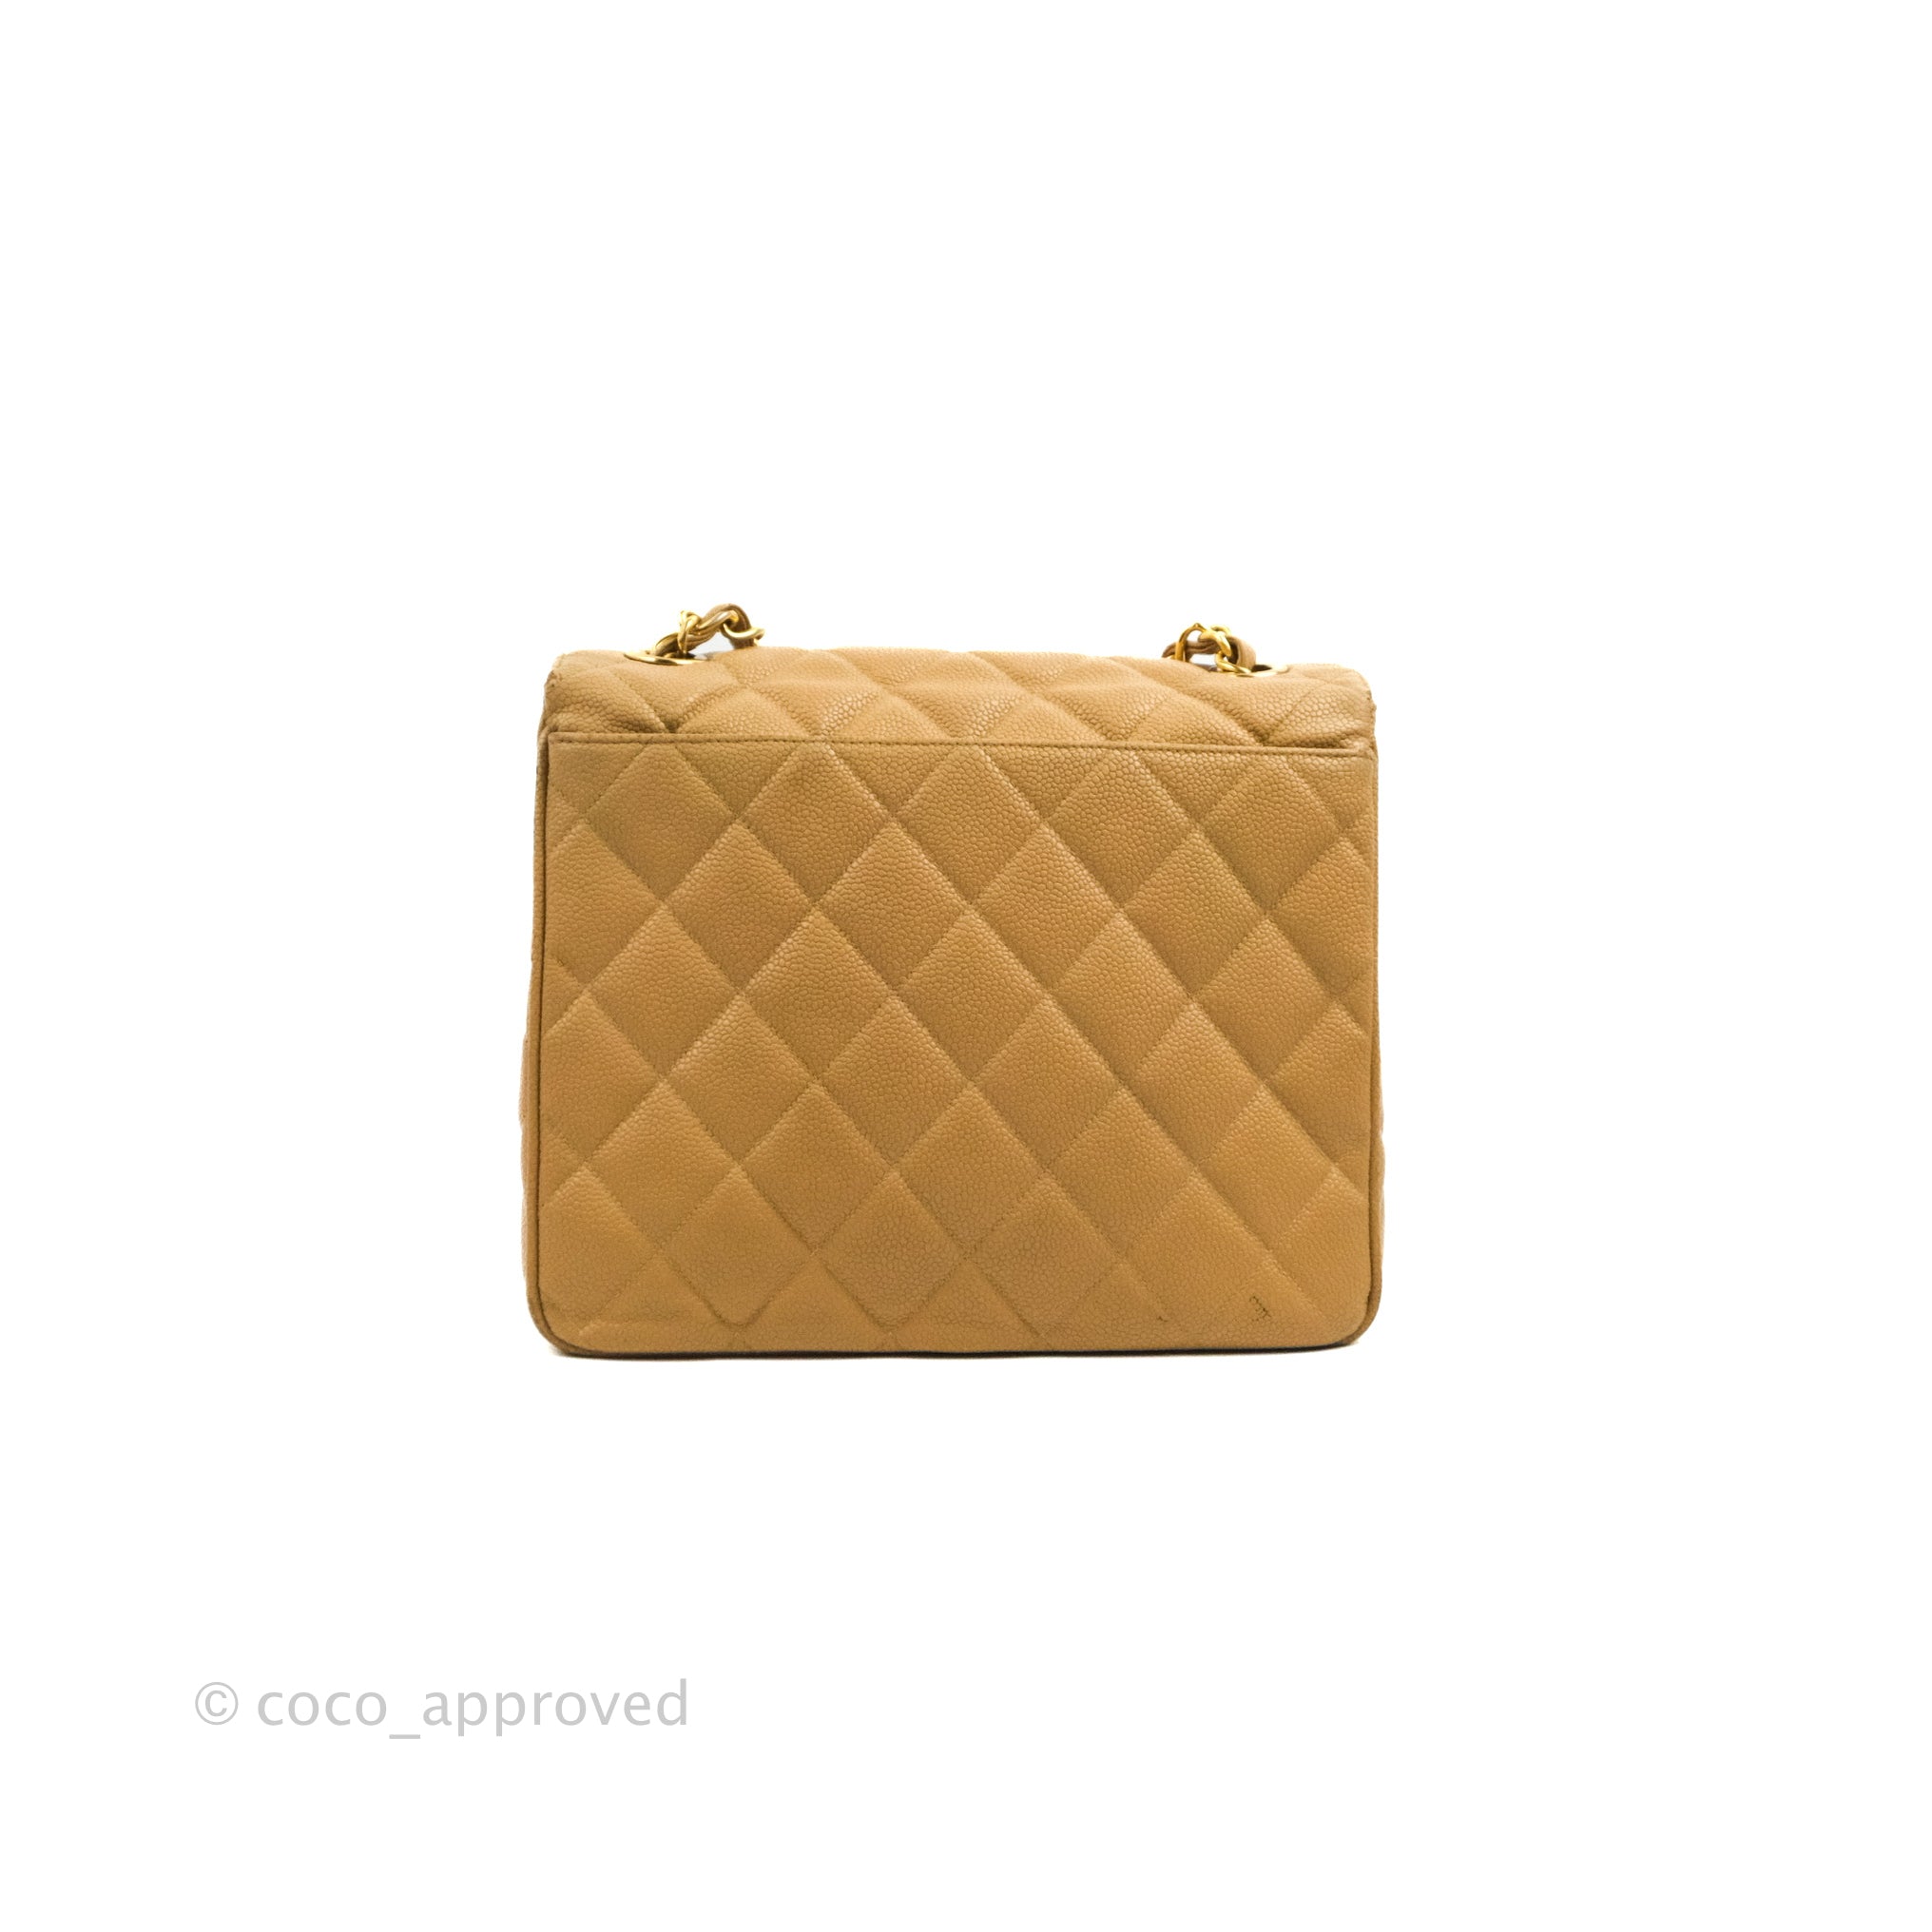 Chanel Vintage Beige Caviar CC Logo Tote Bag with 24k Gold